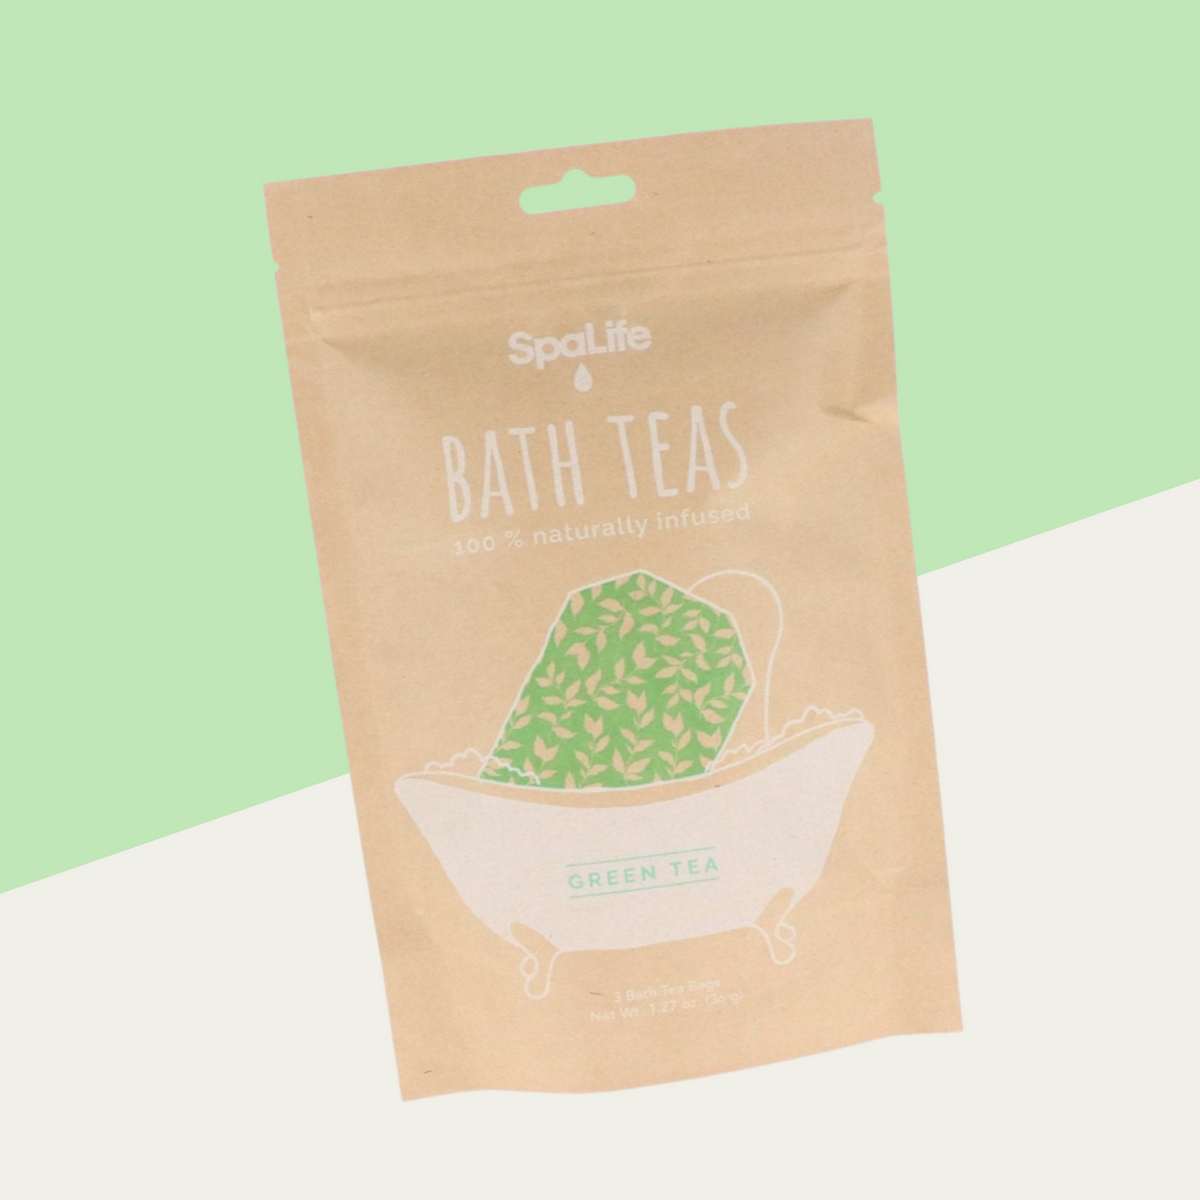 Green Tea Bath Tea